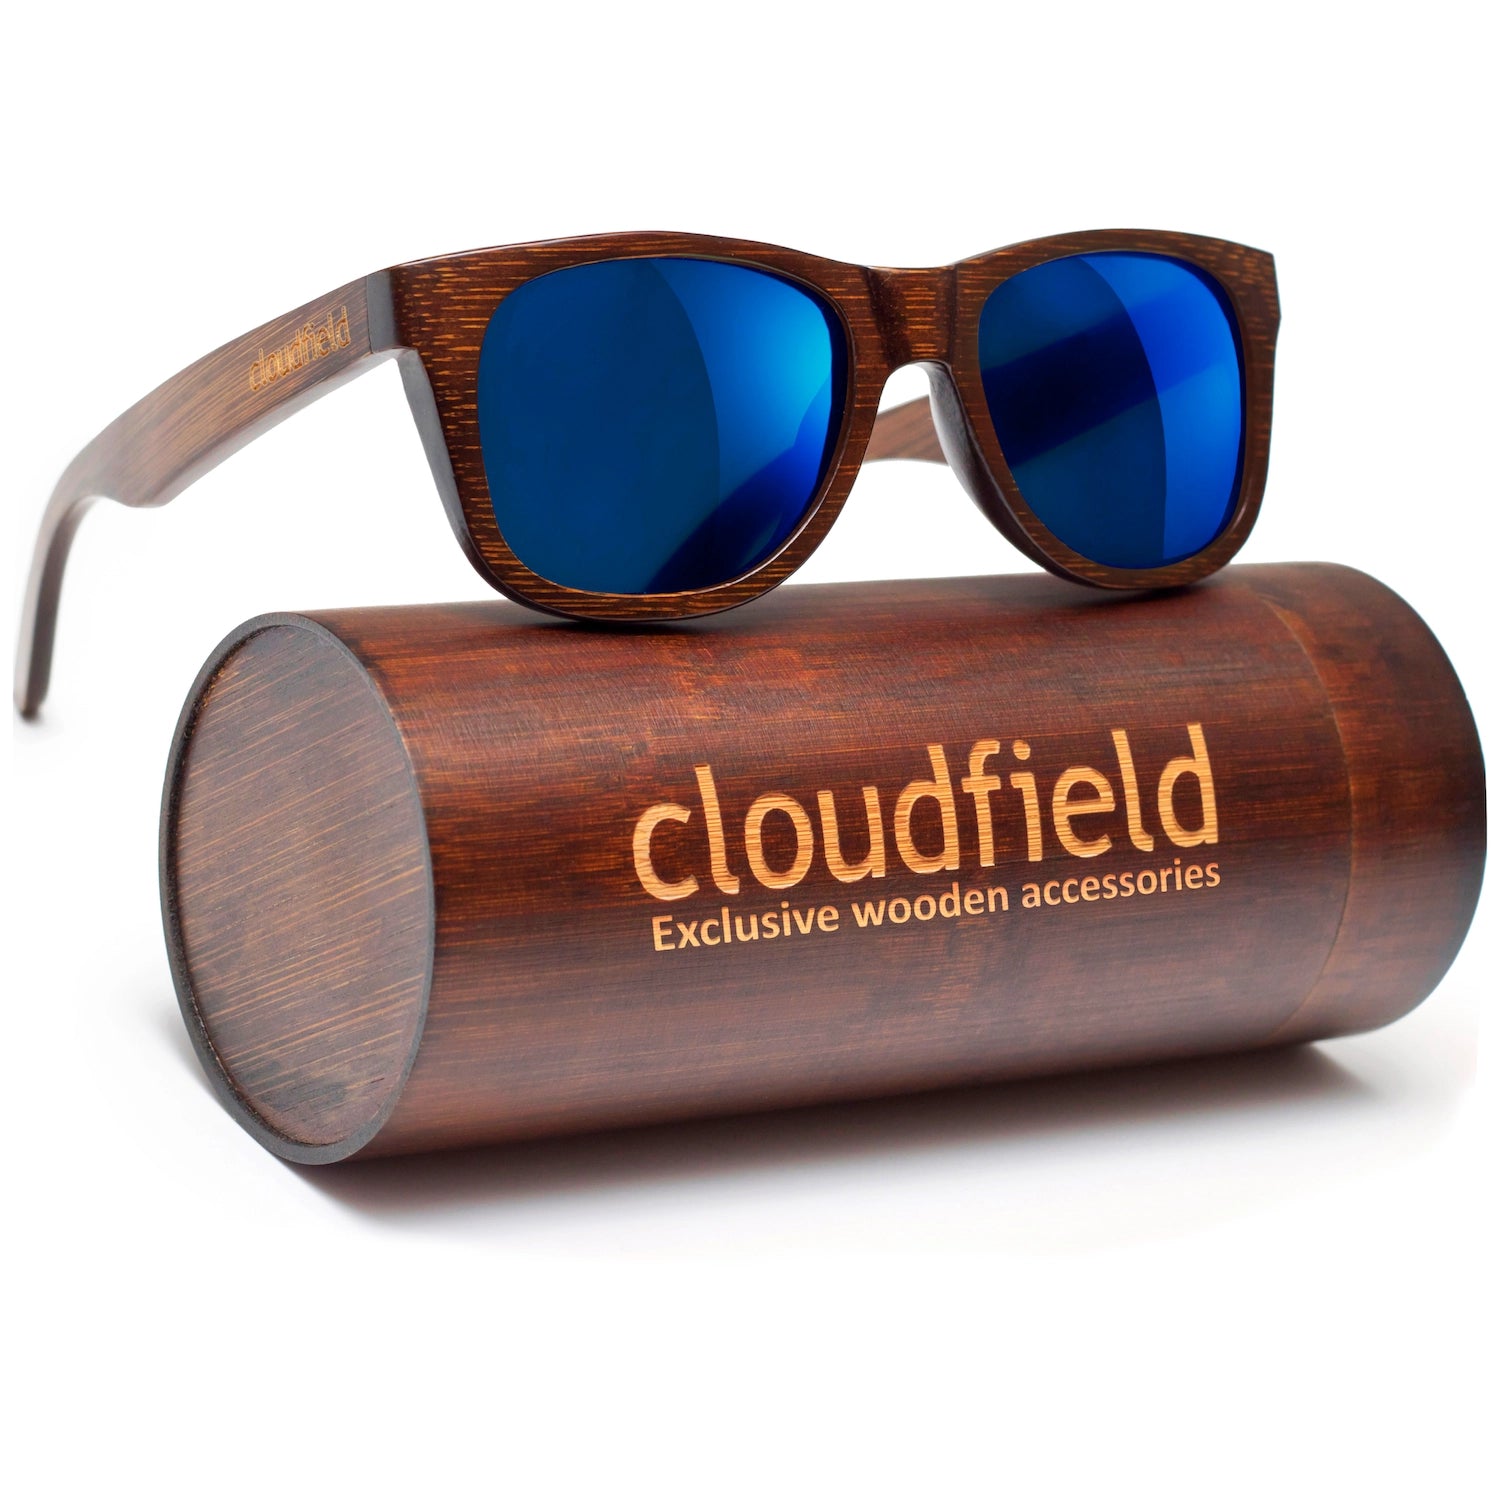 cloudfield blue mirror polarized sunglasses